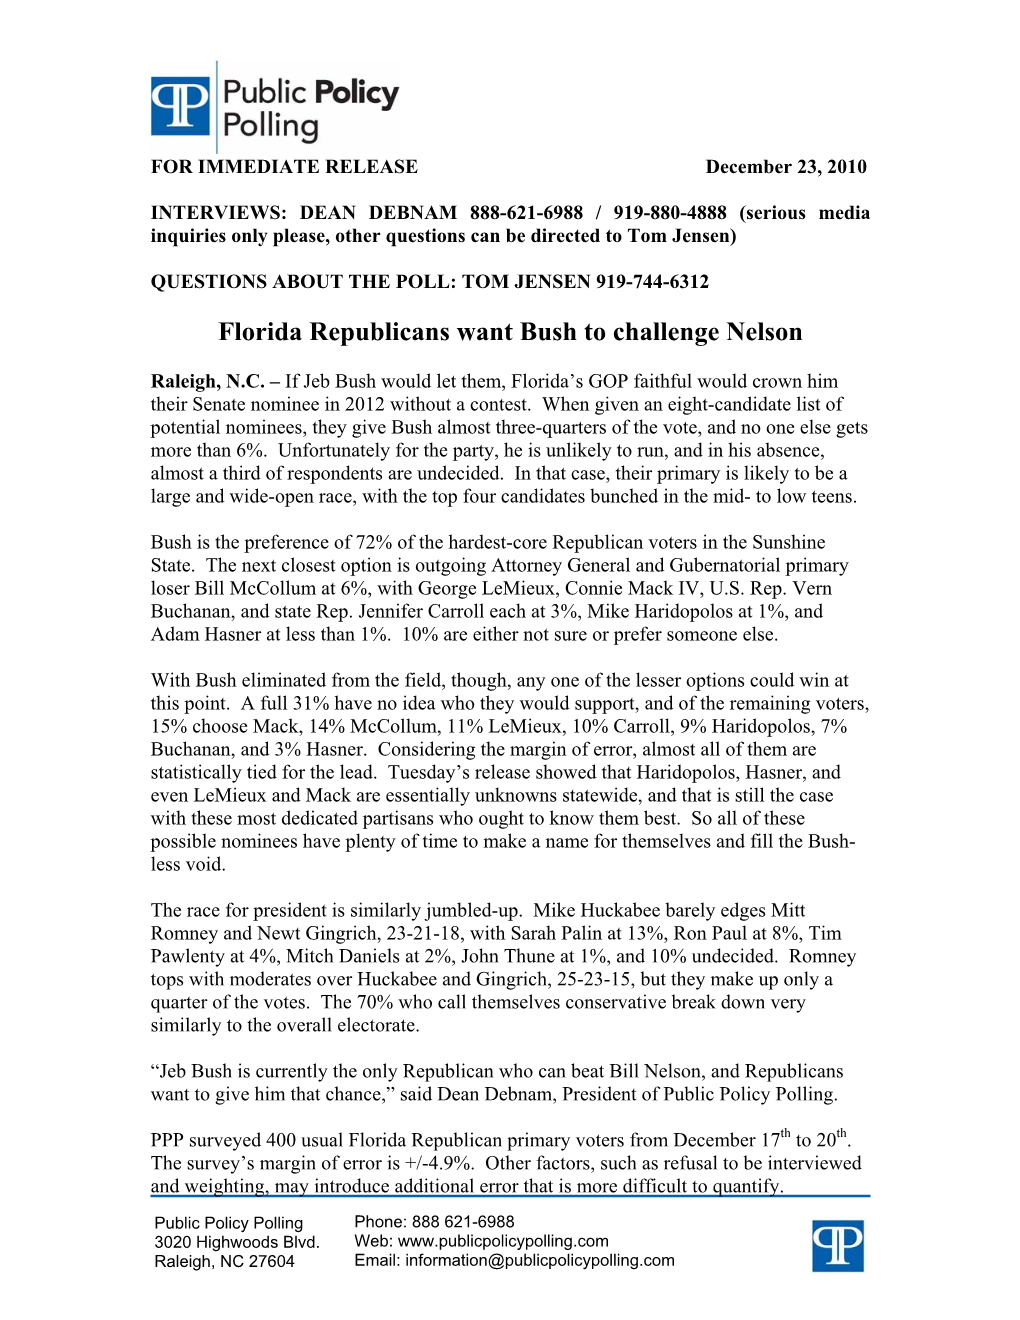 Florida Republicans Want Bush to Challenge Nelson